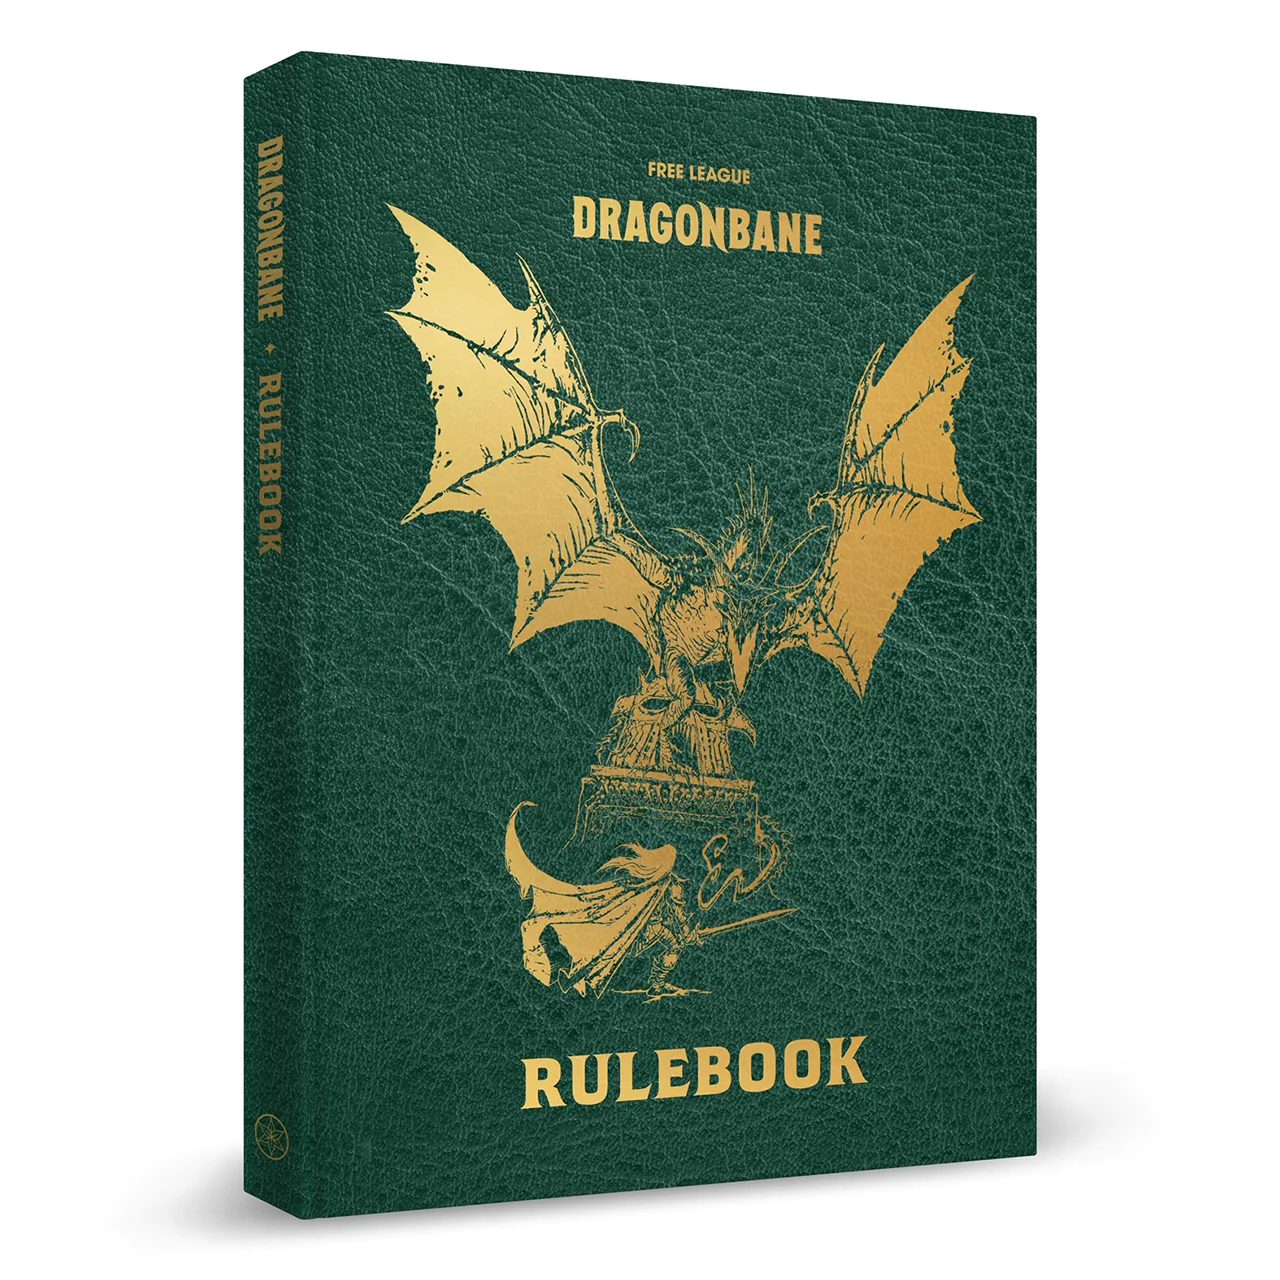 Dragonbane-Regelbuch als Hardcover limitiert